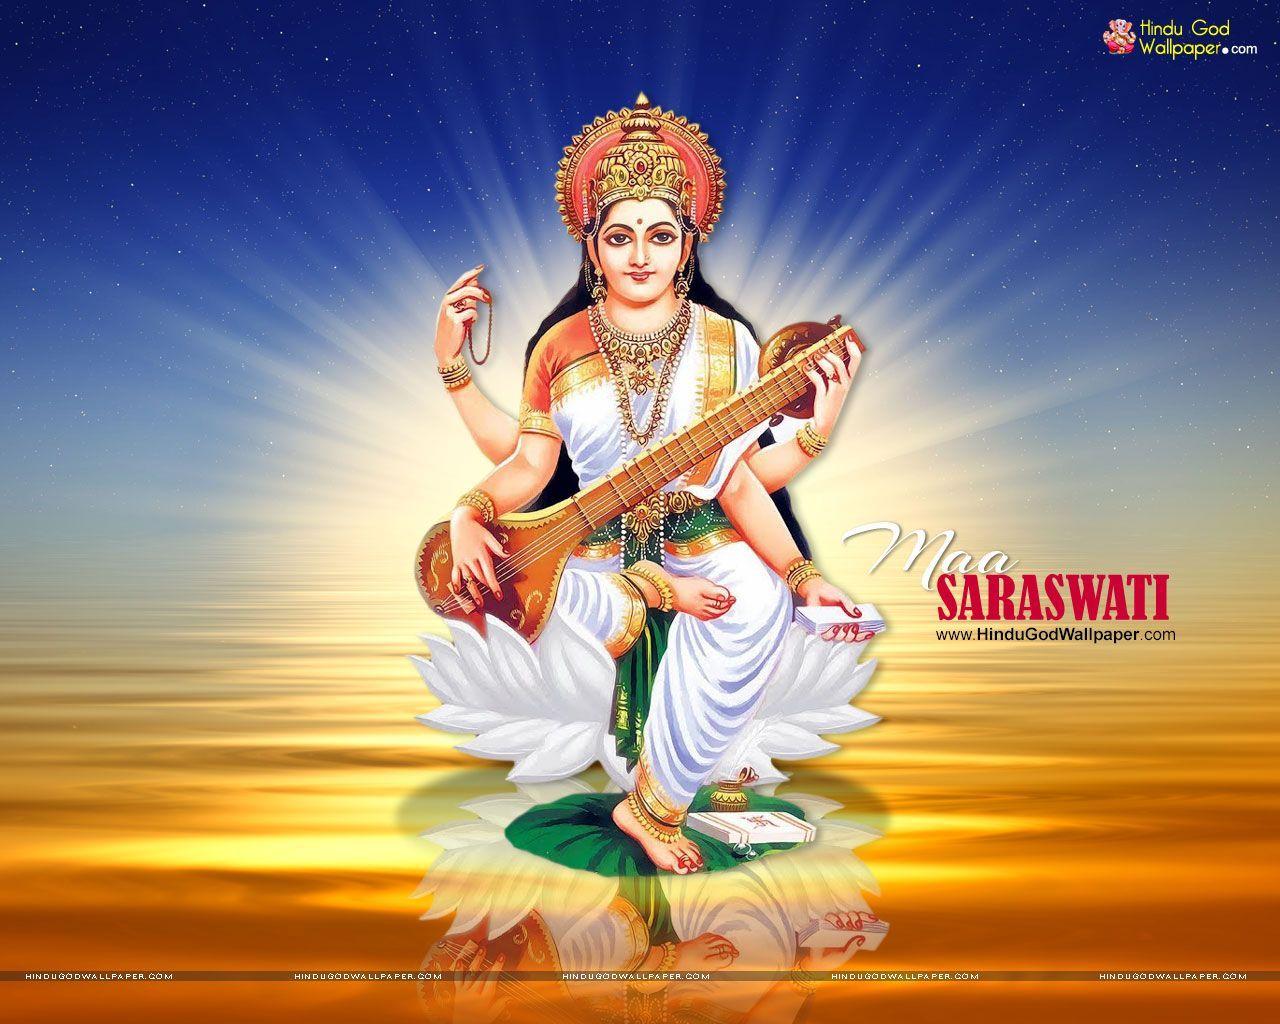 Hindu God Wallpaper For Mobile Free Download